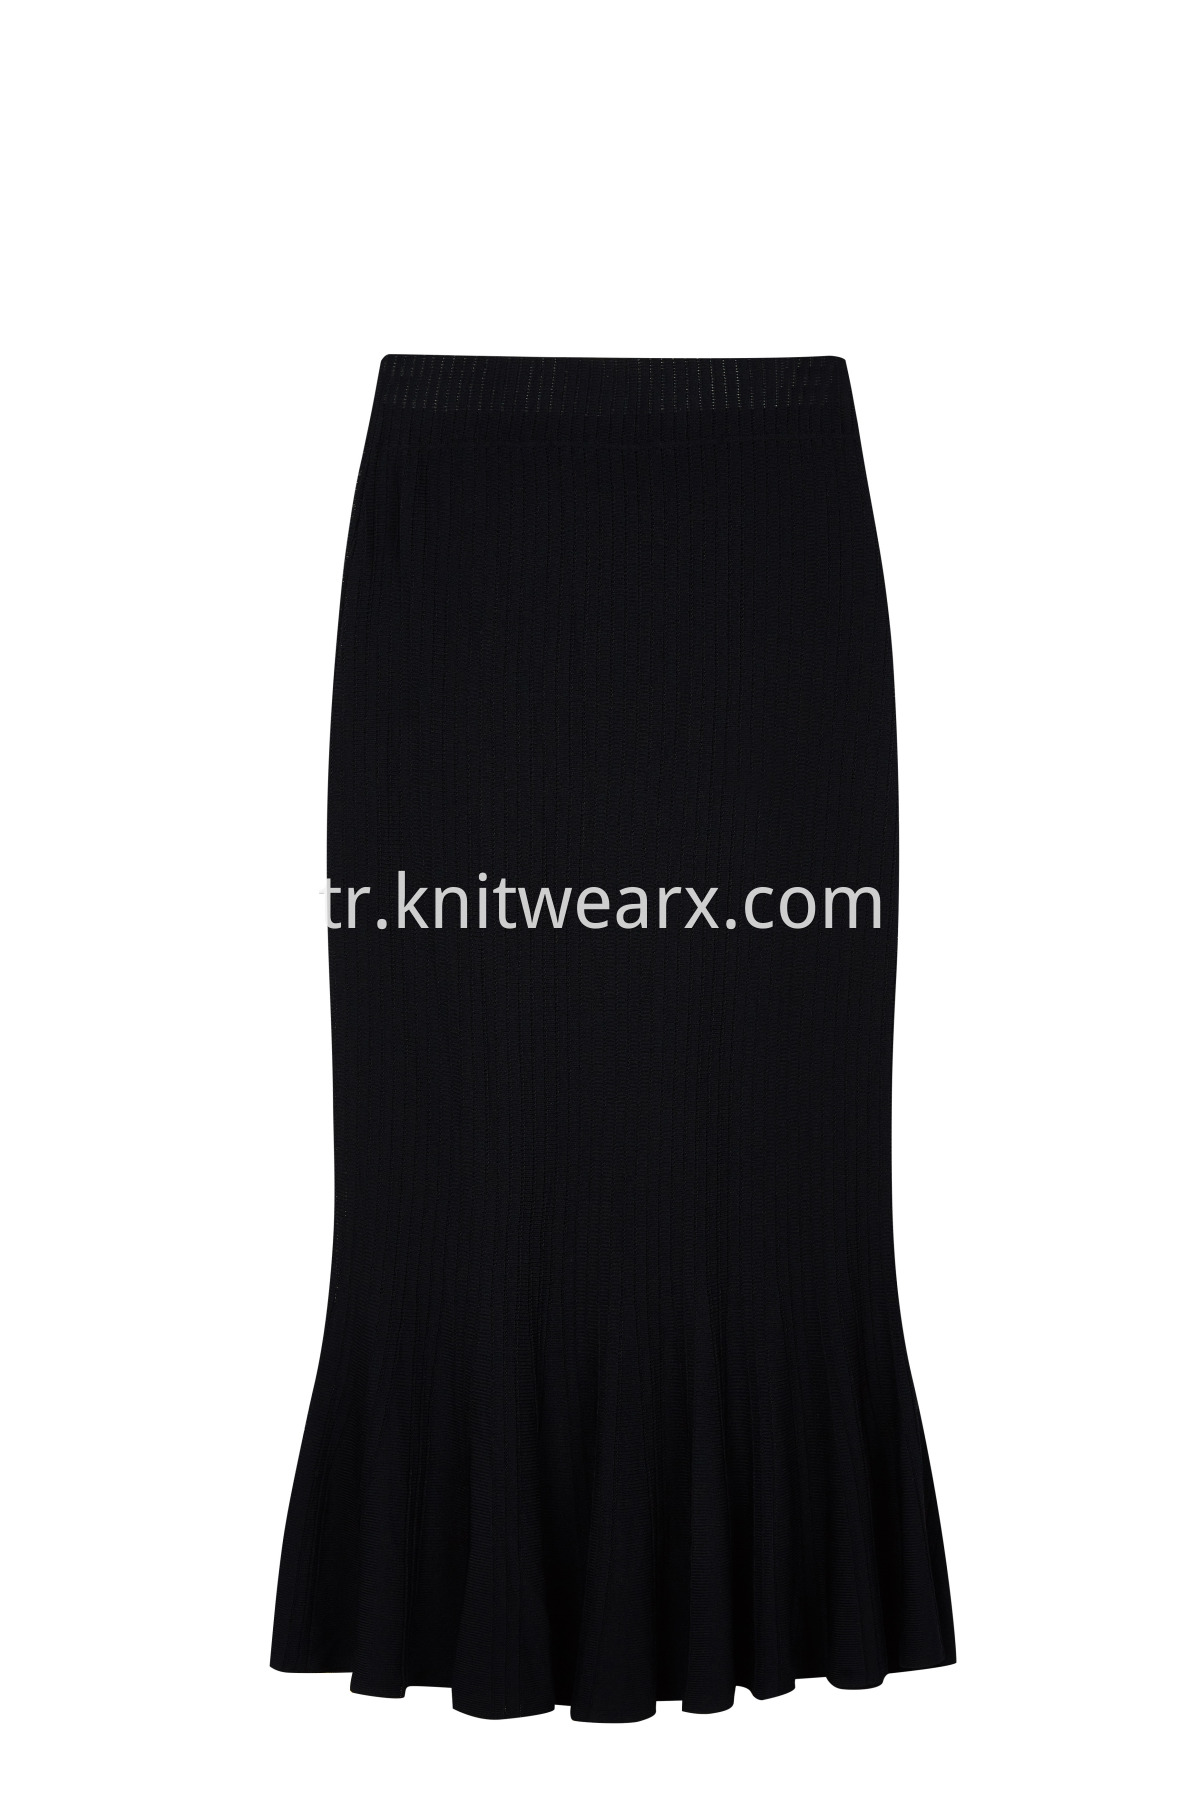 Women's Winter Stretchy Waist Knitted Fishtail Dress Skirt